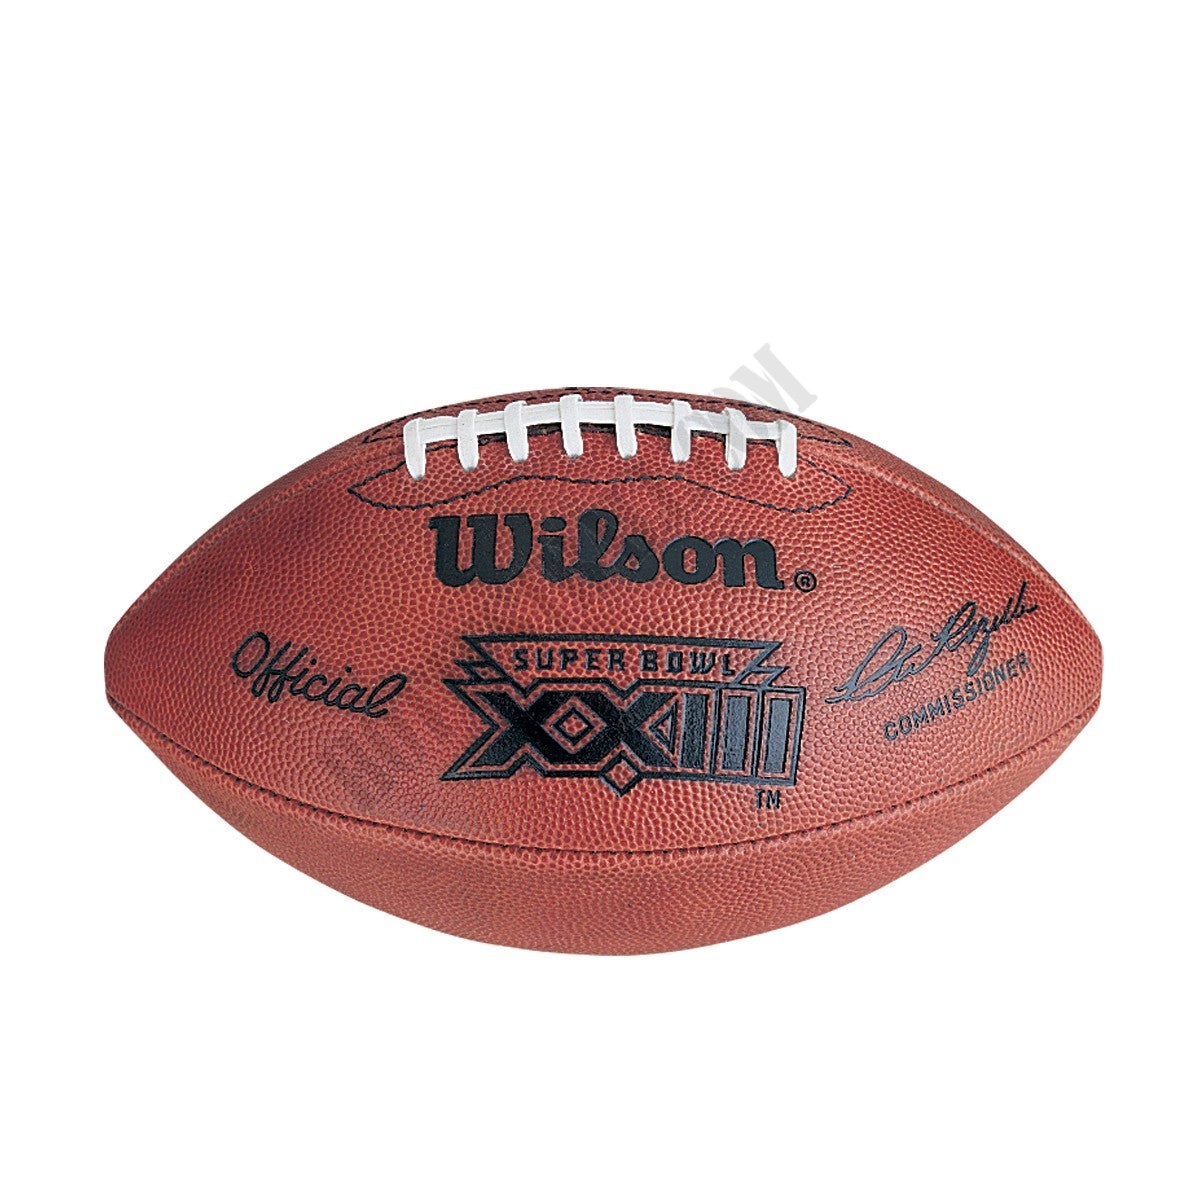 Super Bowl XXIII Game Football - San Francisco 49ers ● Wilson Promotions - Super Bowl XXIII Game Football - San Francisco 49ers ● Wilson Promotions